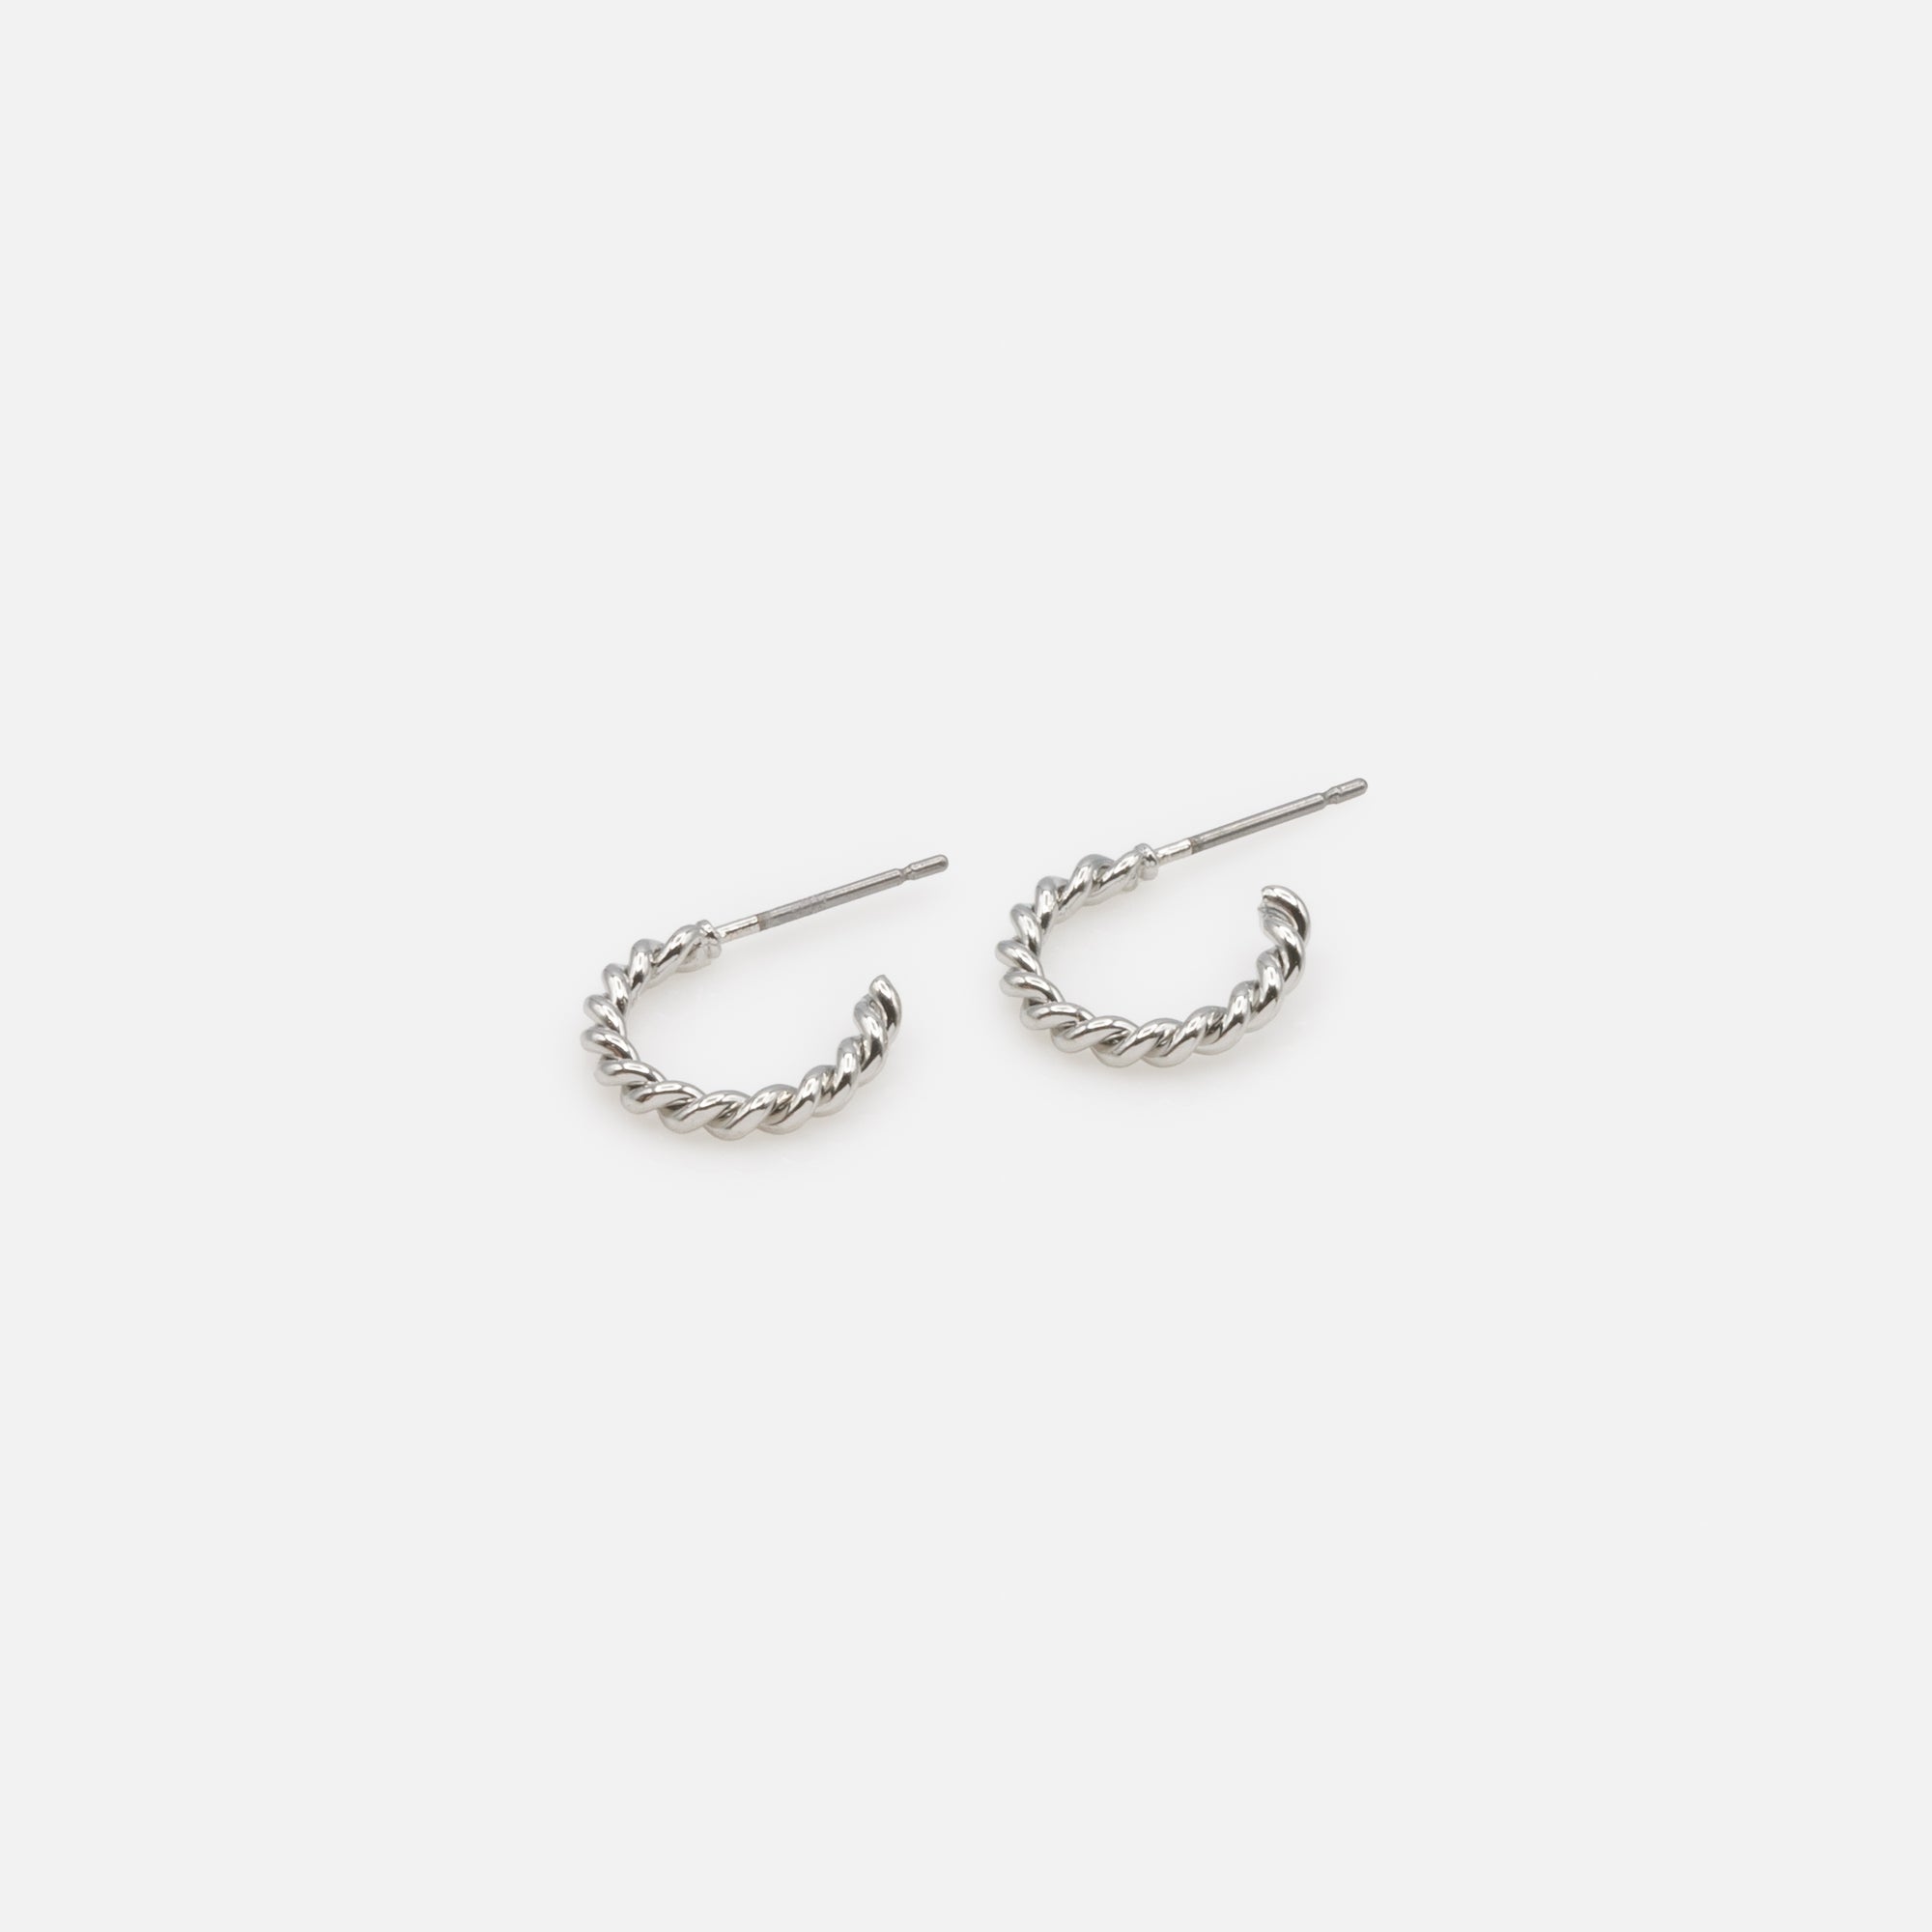 Trio of simple and twisted silver hoop earrings